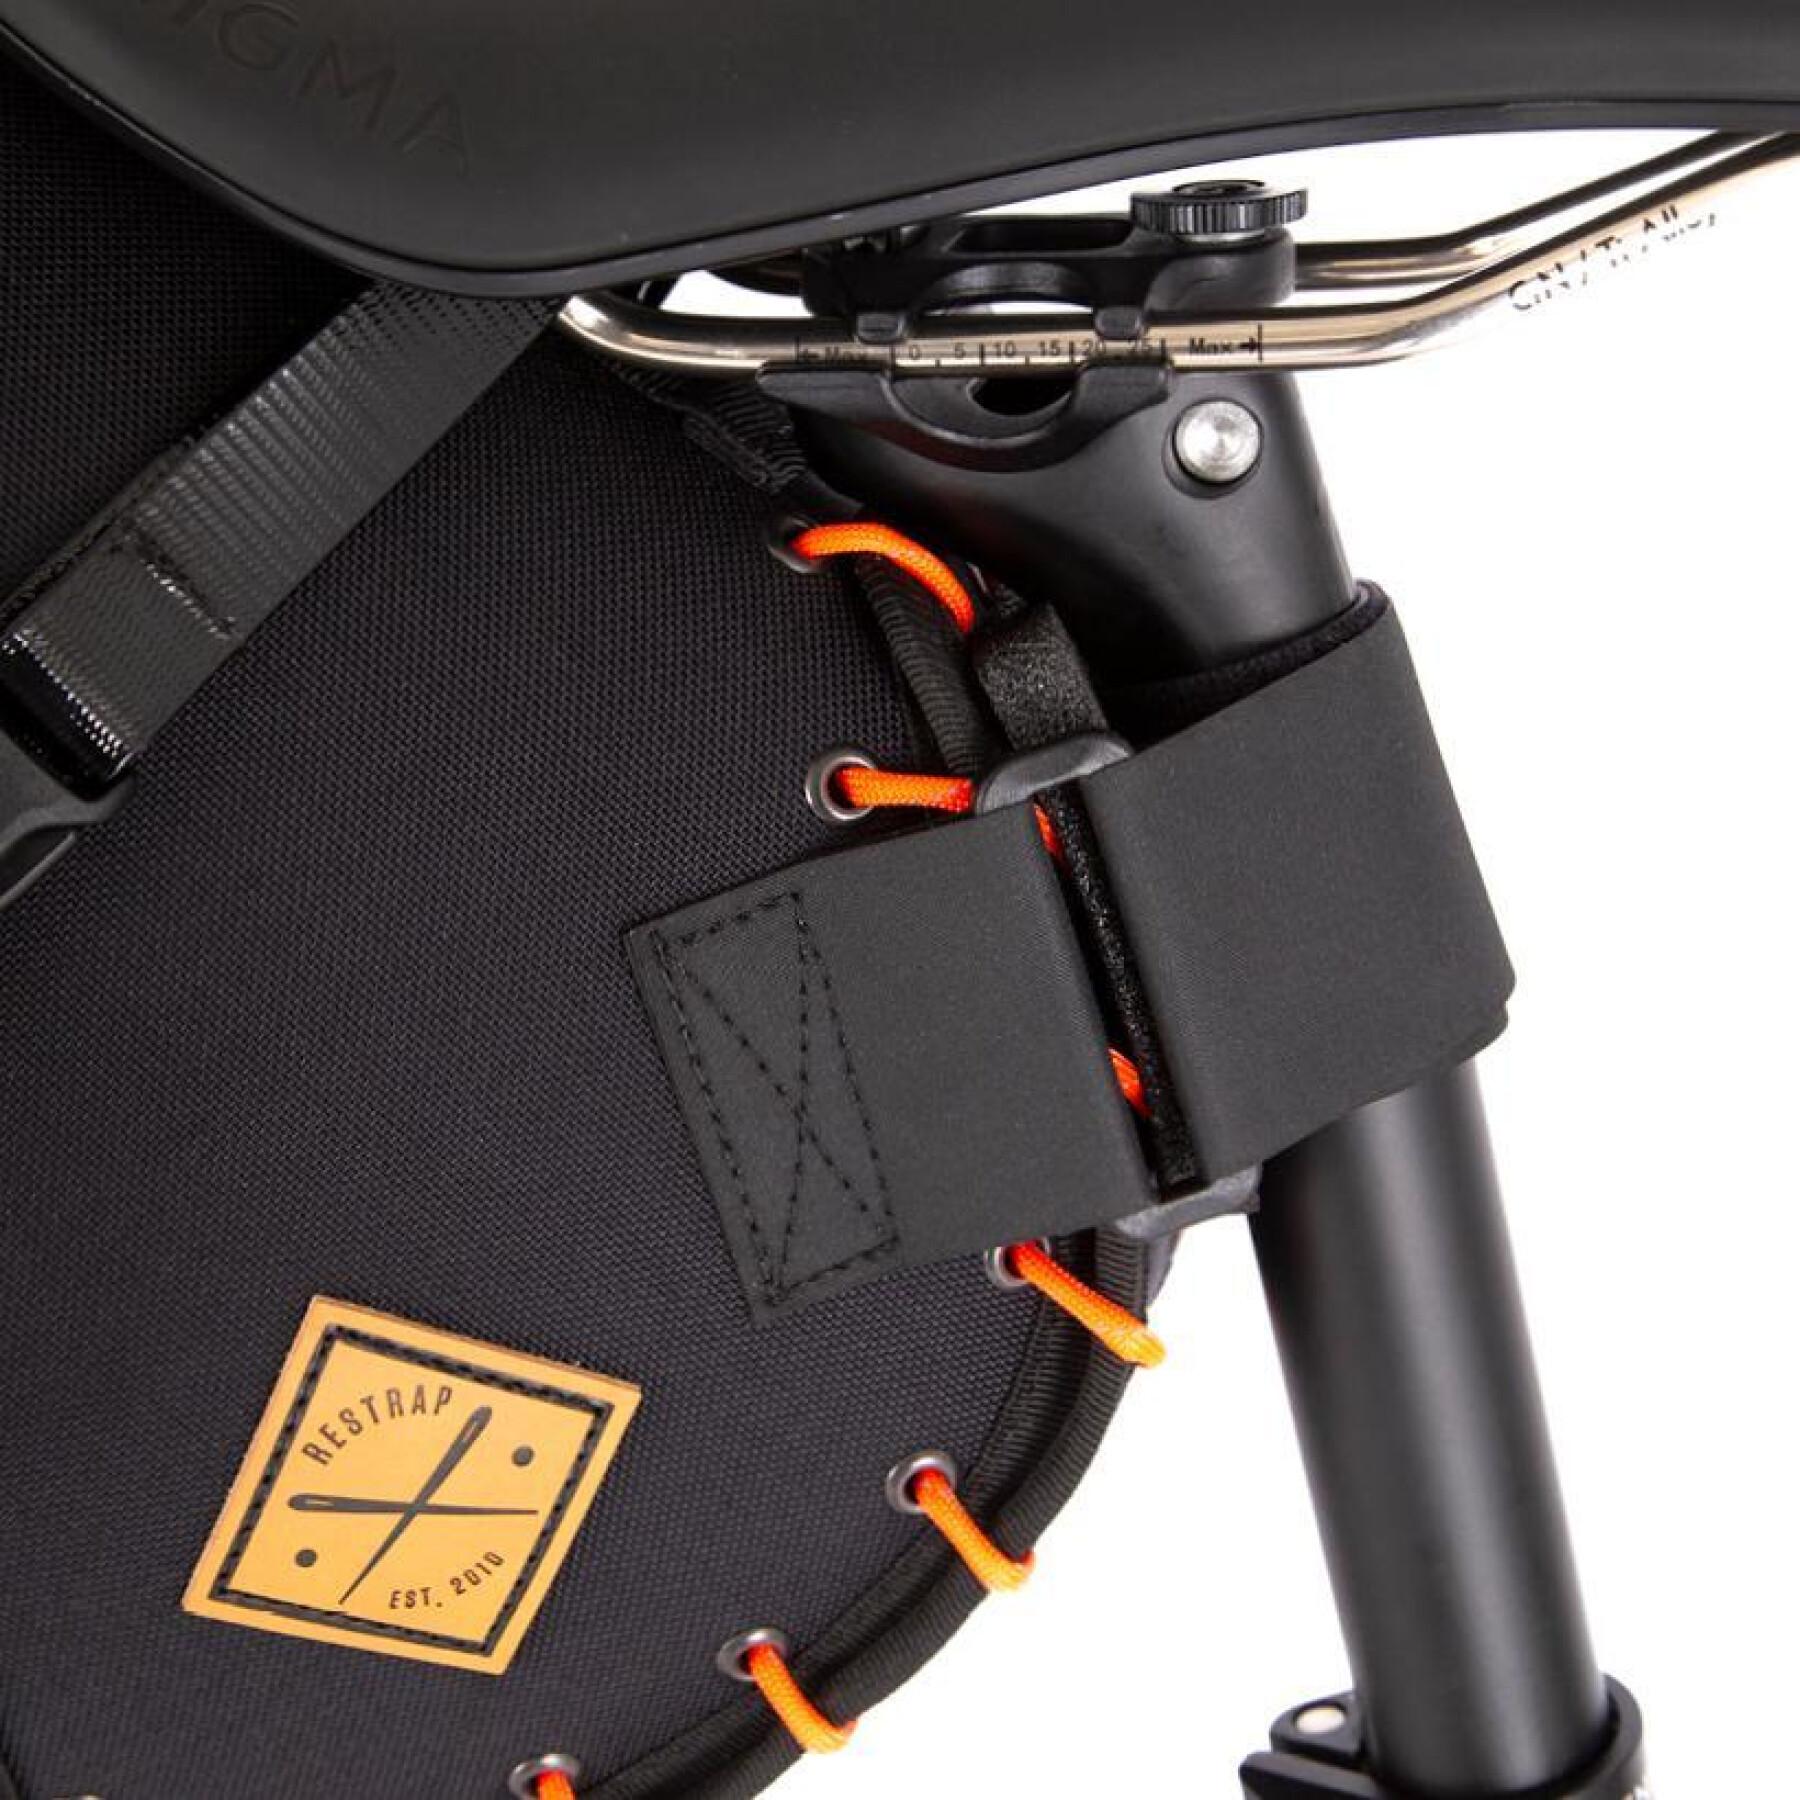 Bike saddle bag + waterproof bag Restrap 8 L